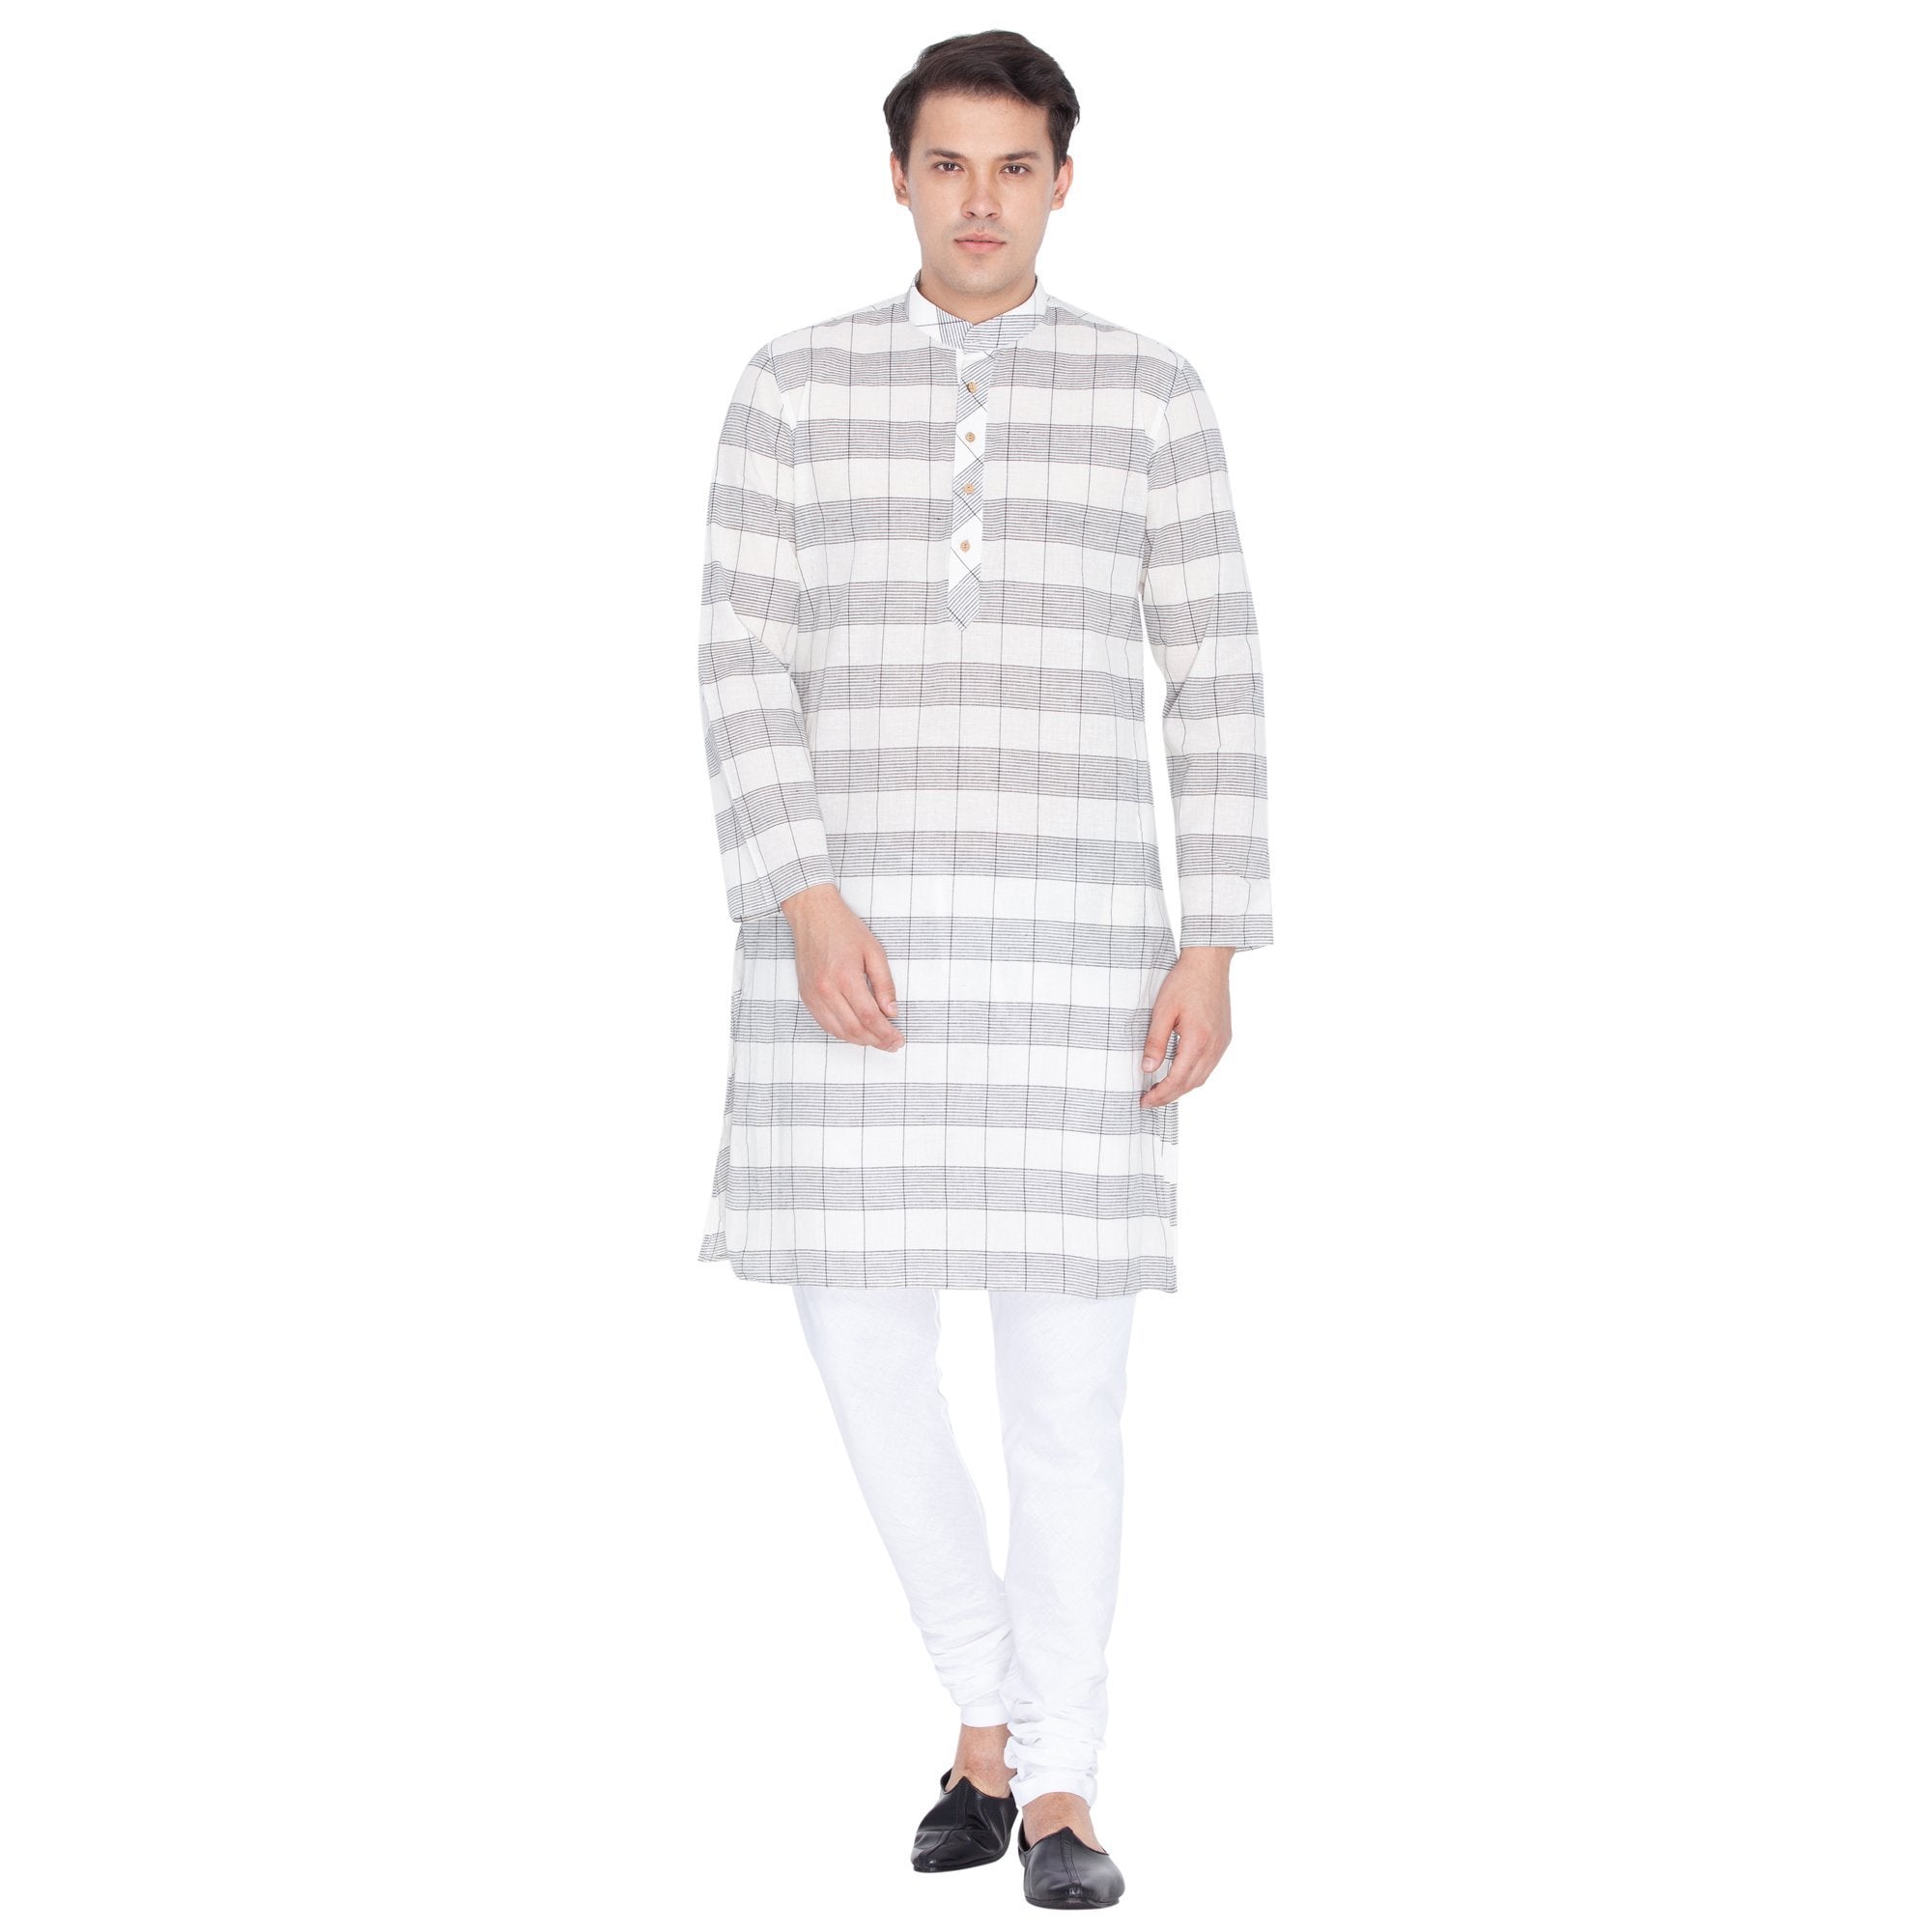 Men's White Cotton Kurta and Pyjama Set